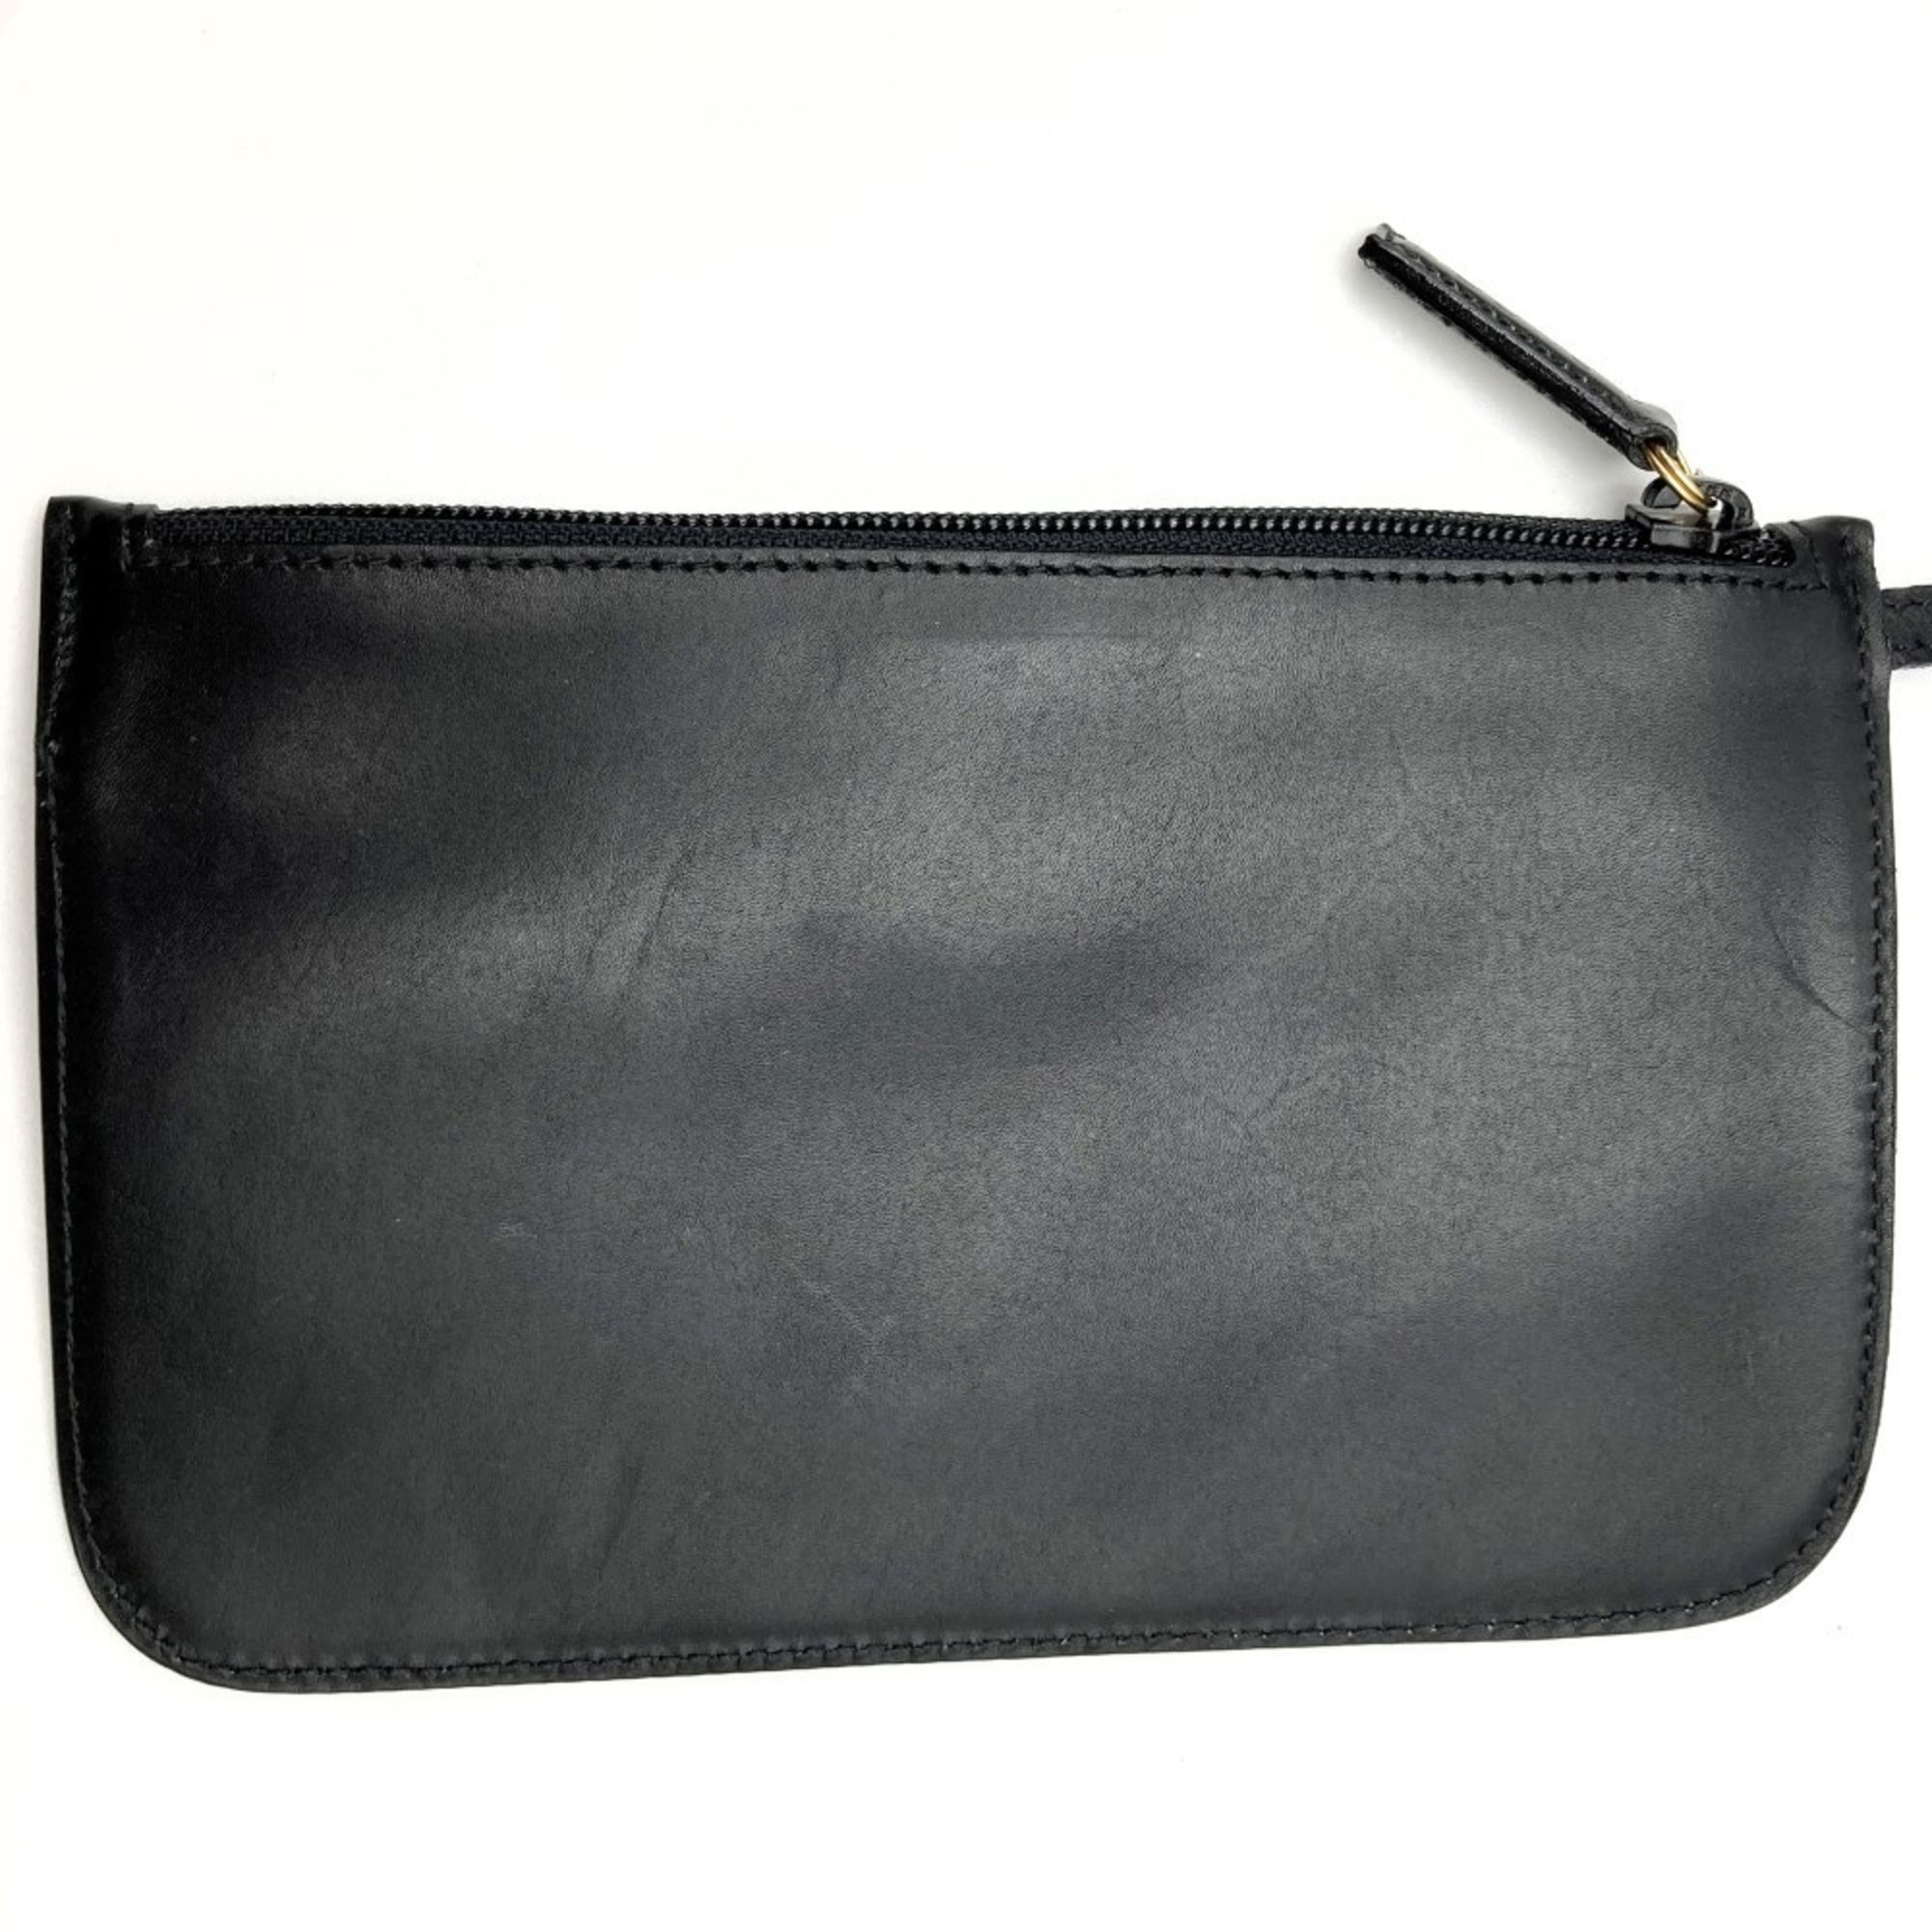 Gucci Bamboo Shoulder Bag Handbag Black Leather 0011553 GUCCI